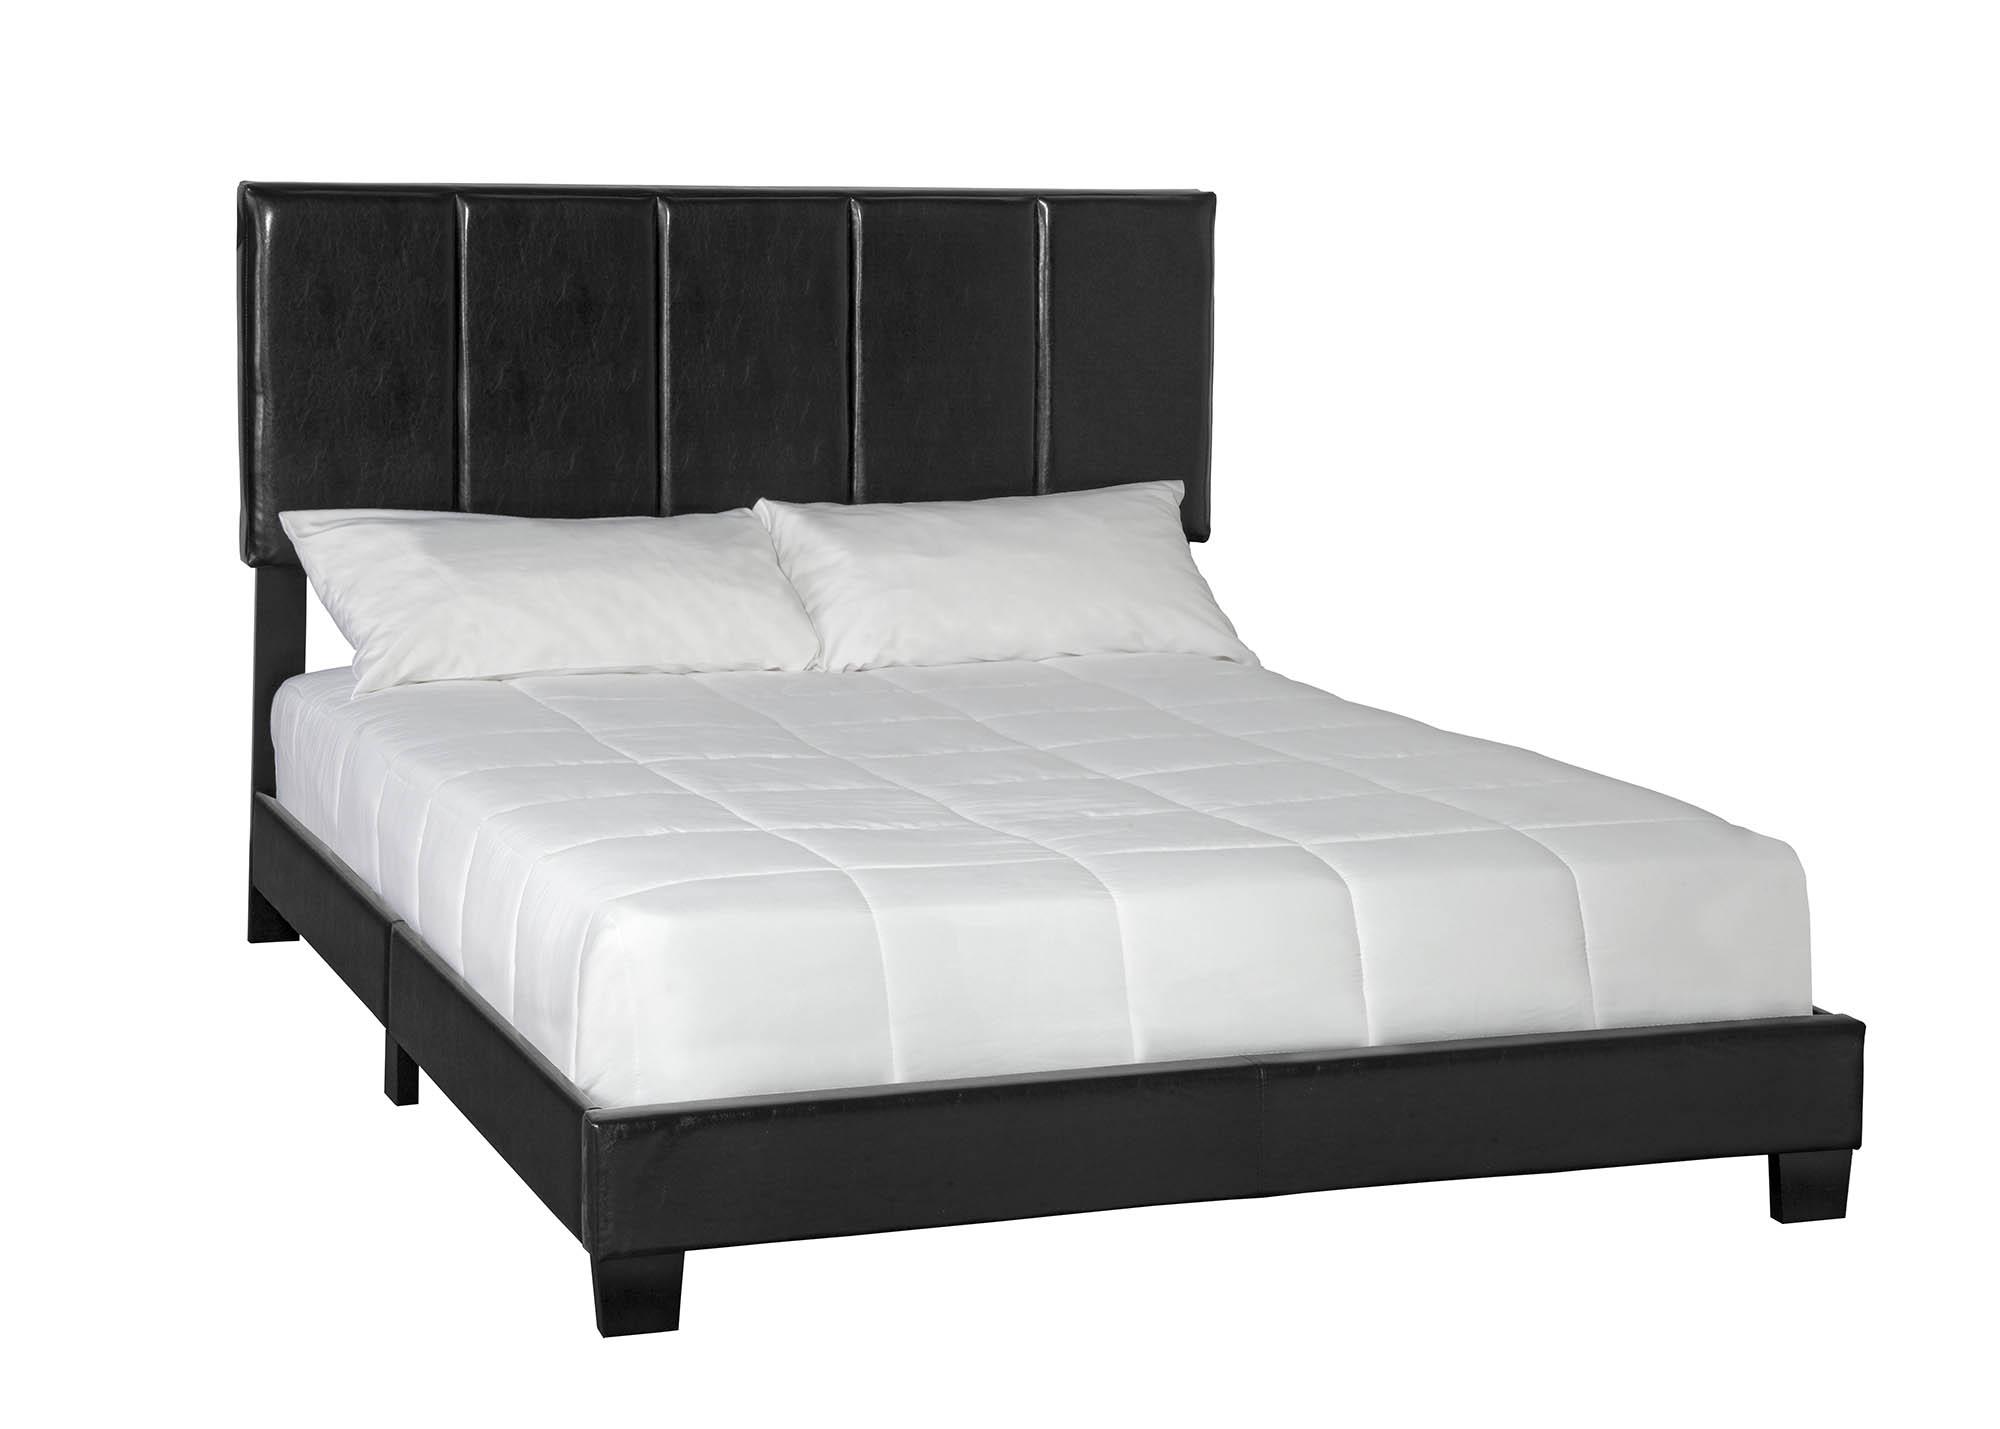 Modern, Transitional Panel Bed HARPER 1601-103 1601-103 in Black Eco Leather